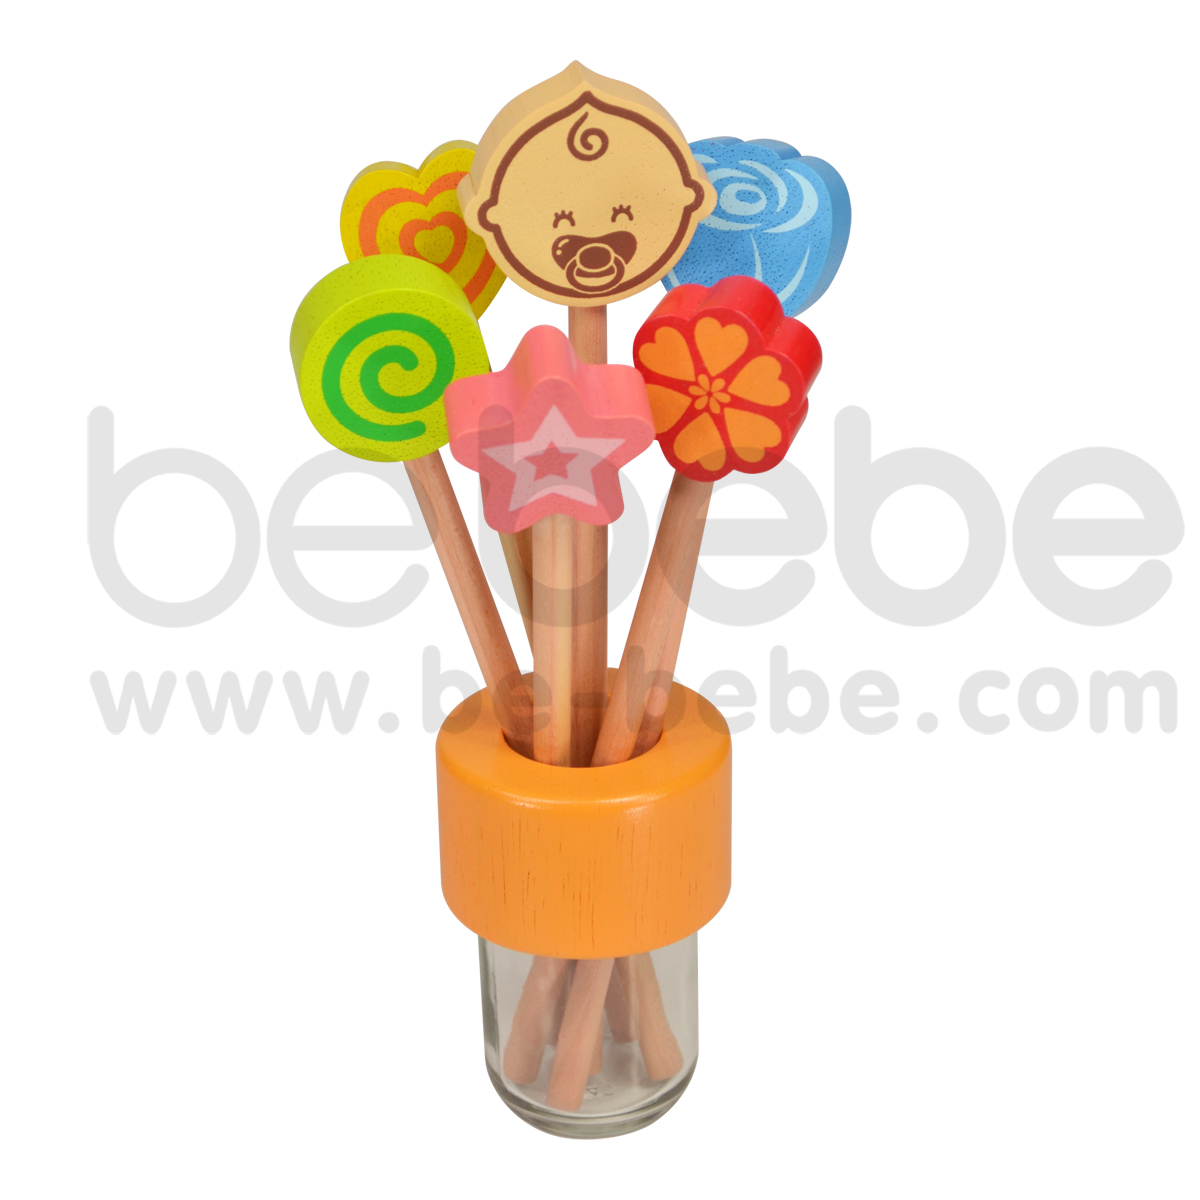 bebebe : Pencil-S-Heart Flower/Red